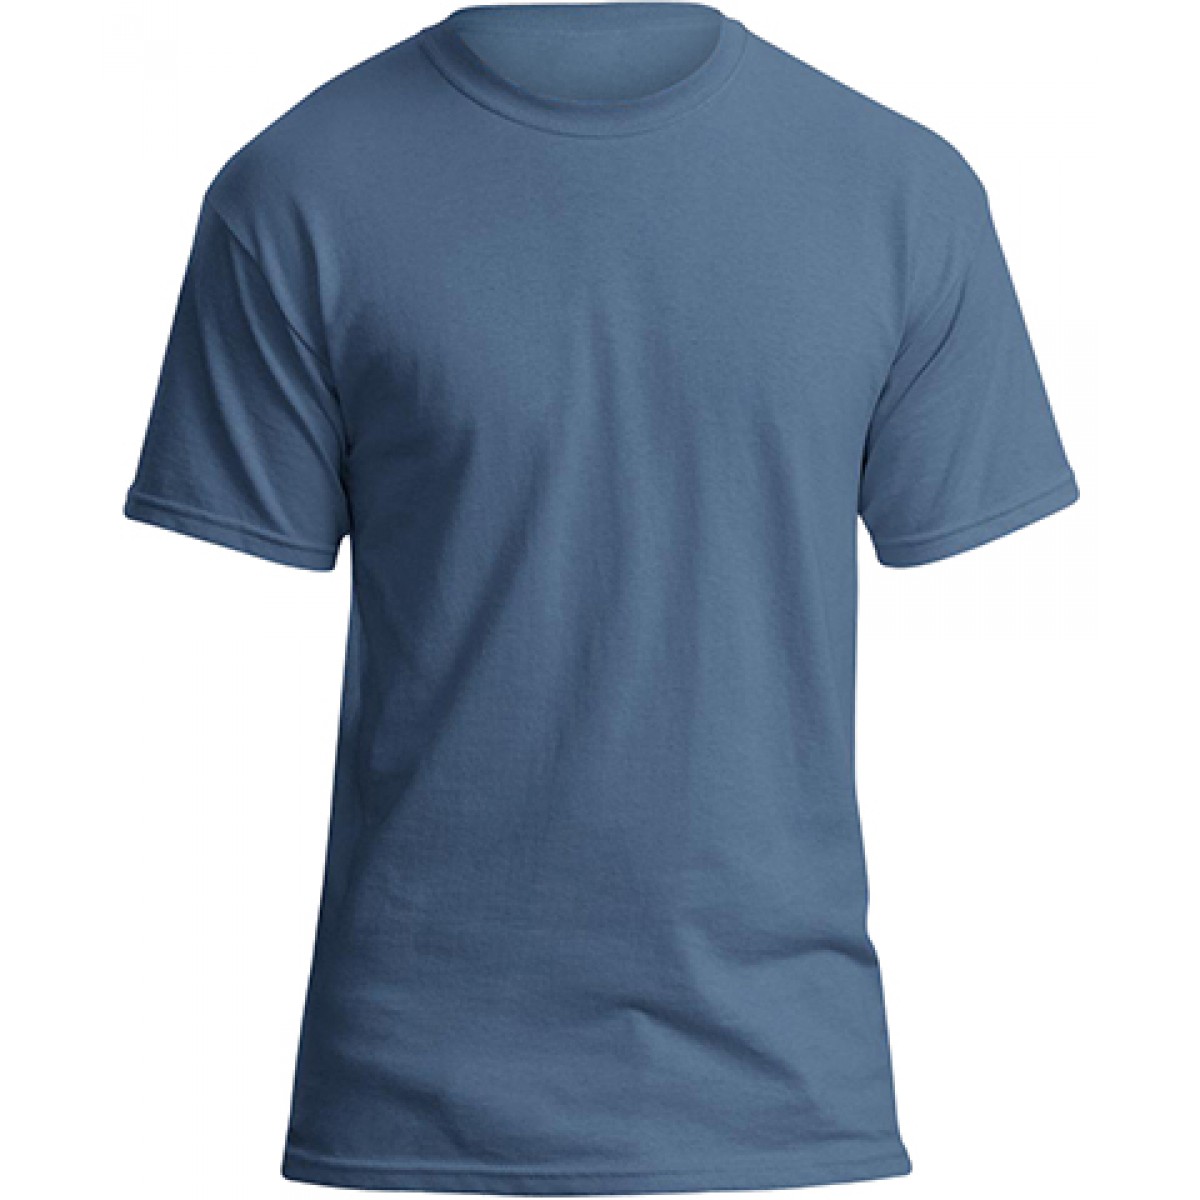 Soft 100% Cotton T-Shirt-Indigo Blue-3XL